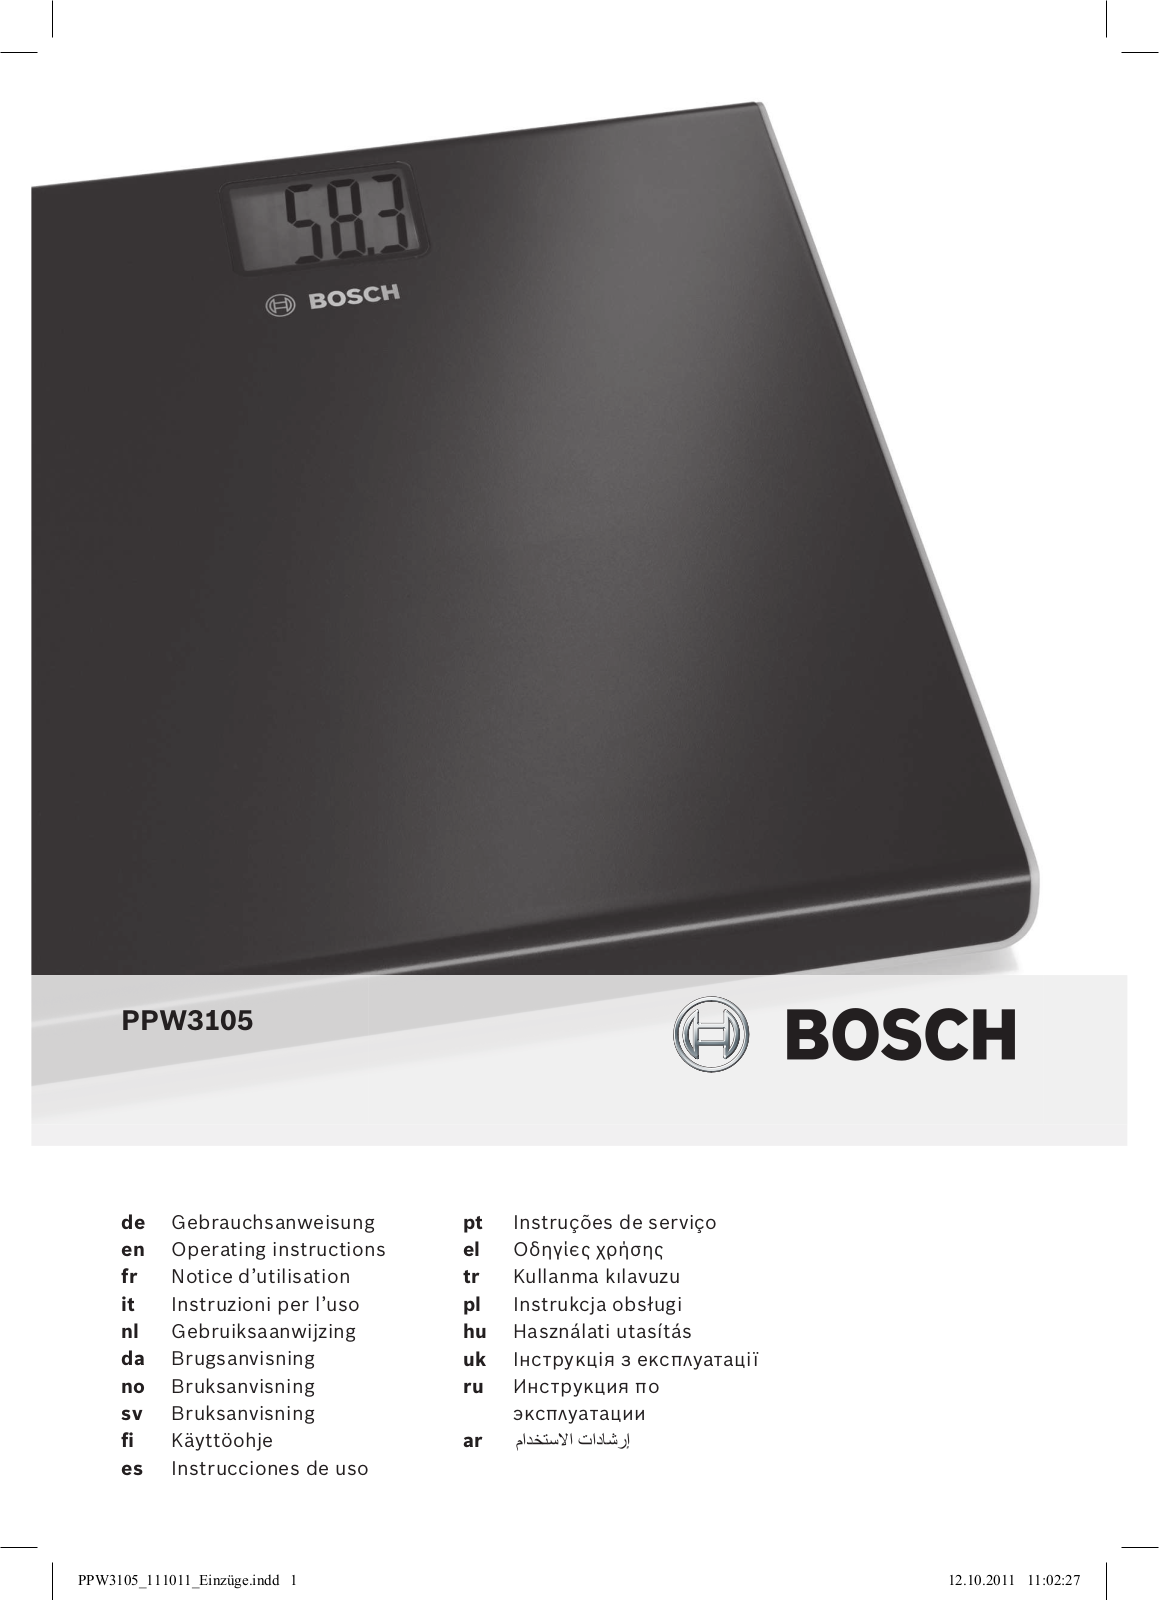 Bosch PPW3105 User Manual